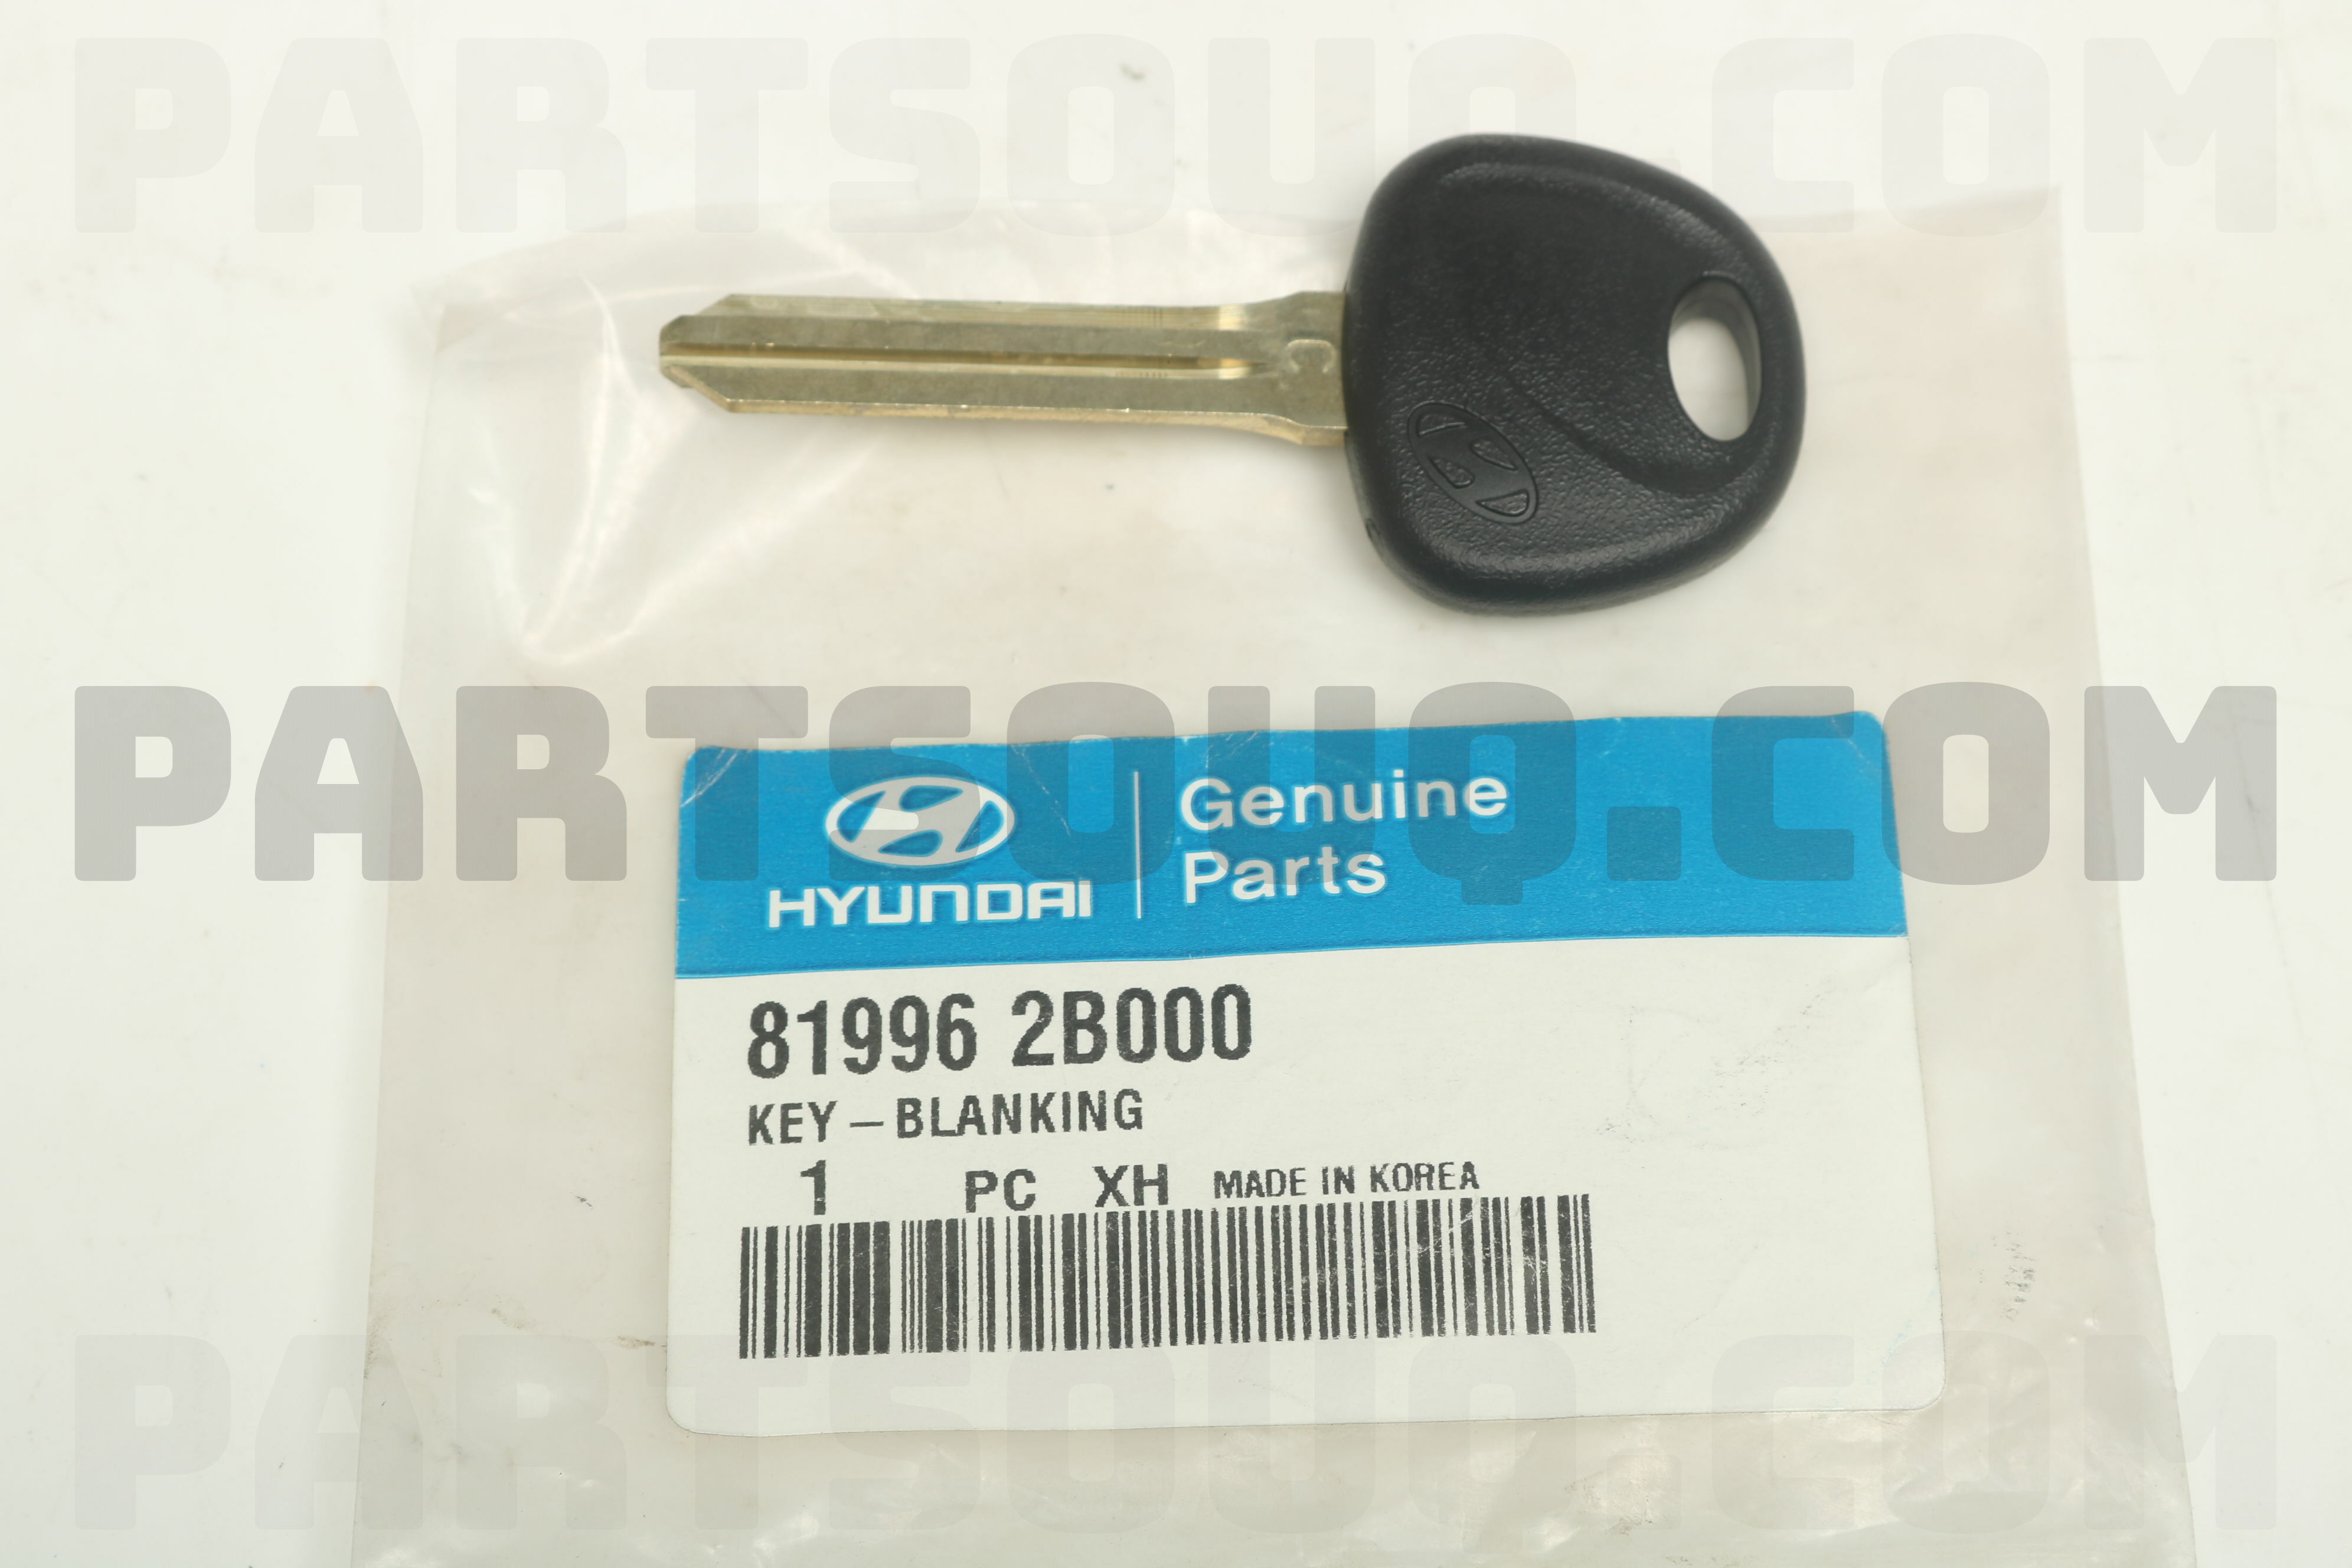 Genuine 819962B000 Uncut Blank Key For HYUNDAI VERACRUZ iX55 2011-2014 